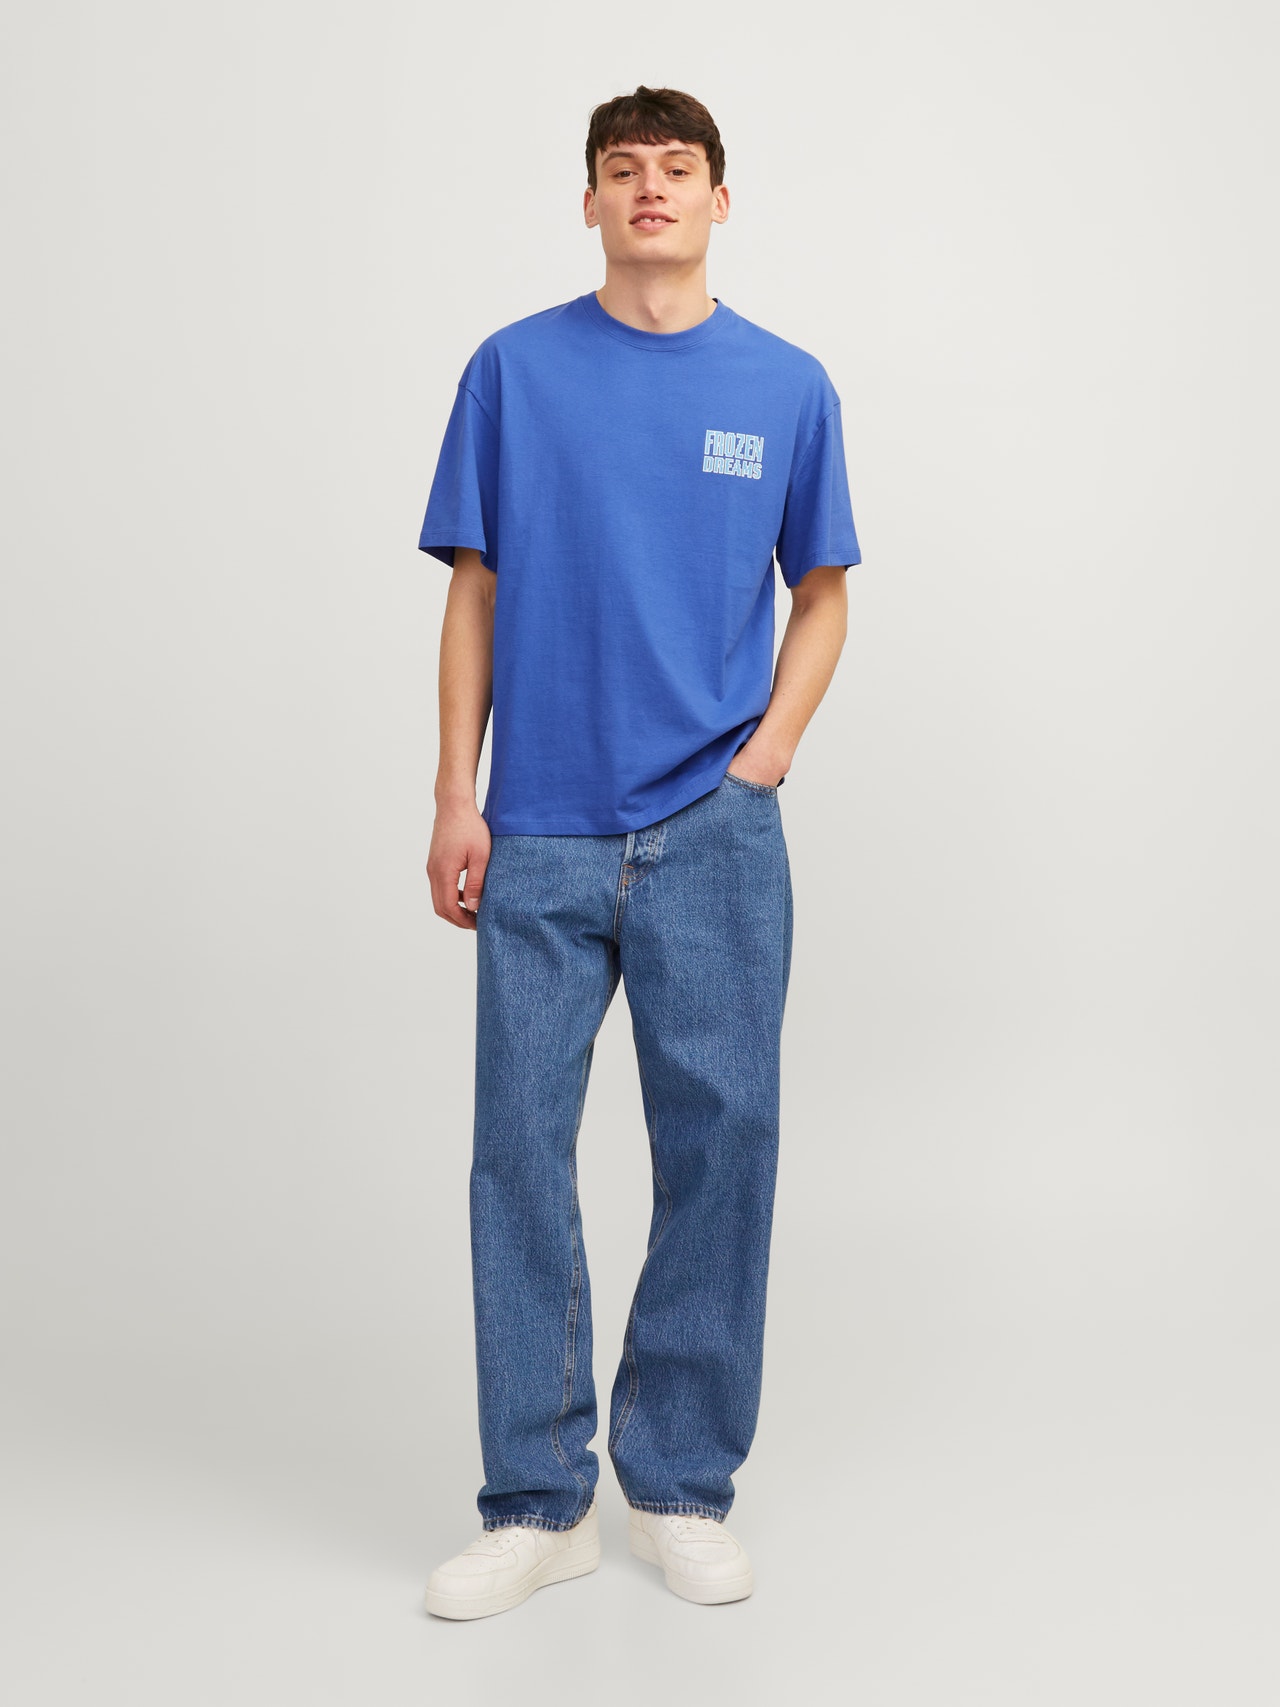 Jack & Jones Printed Crew neck T-shirt -Dazzling Blue - 12256928